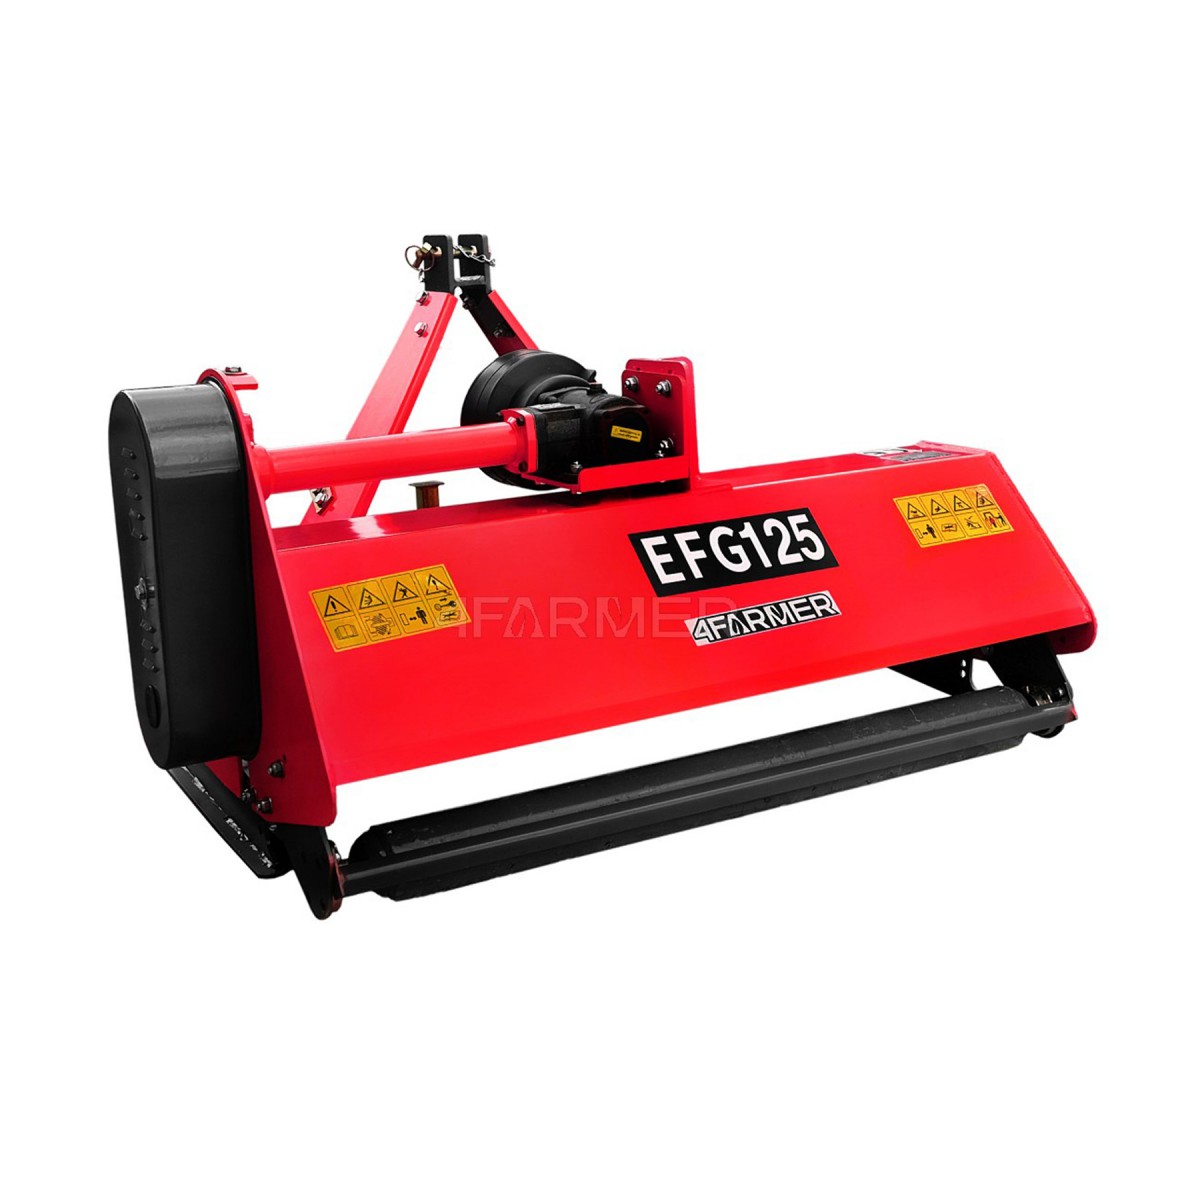 EFG 115 4FARMER flail mower - red